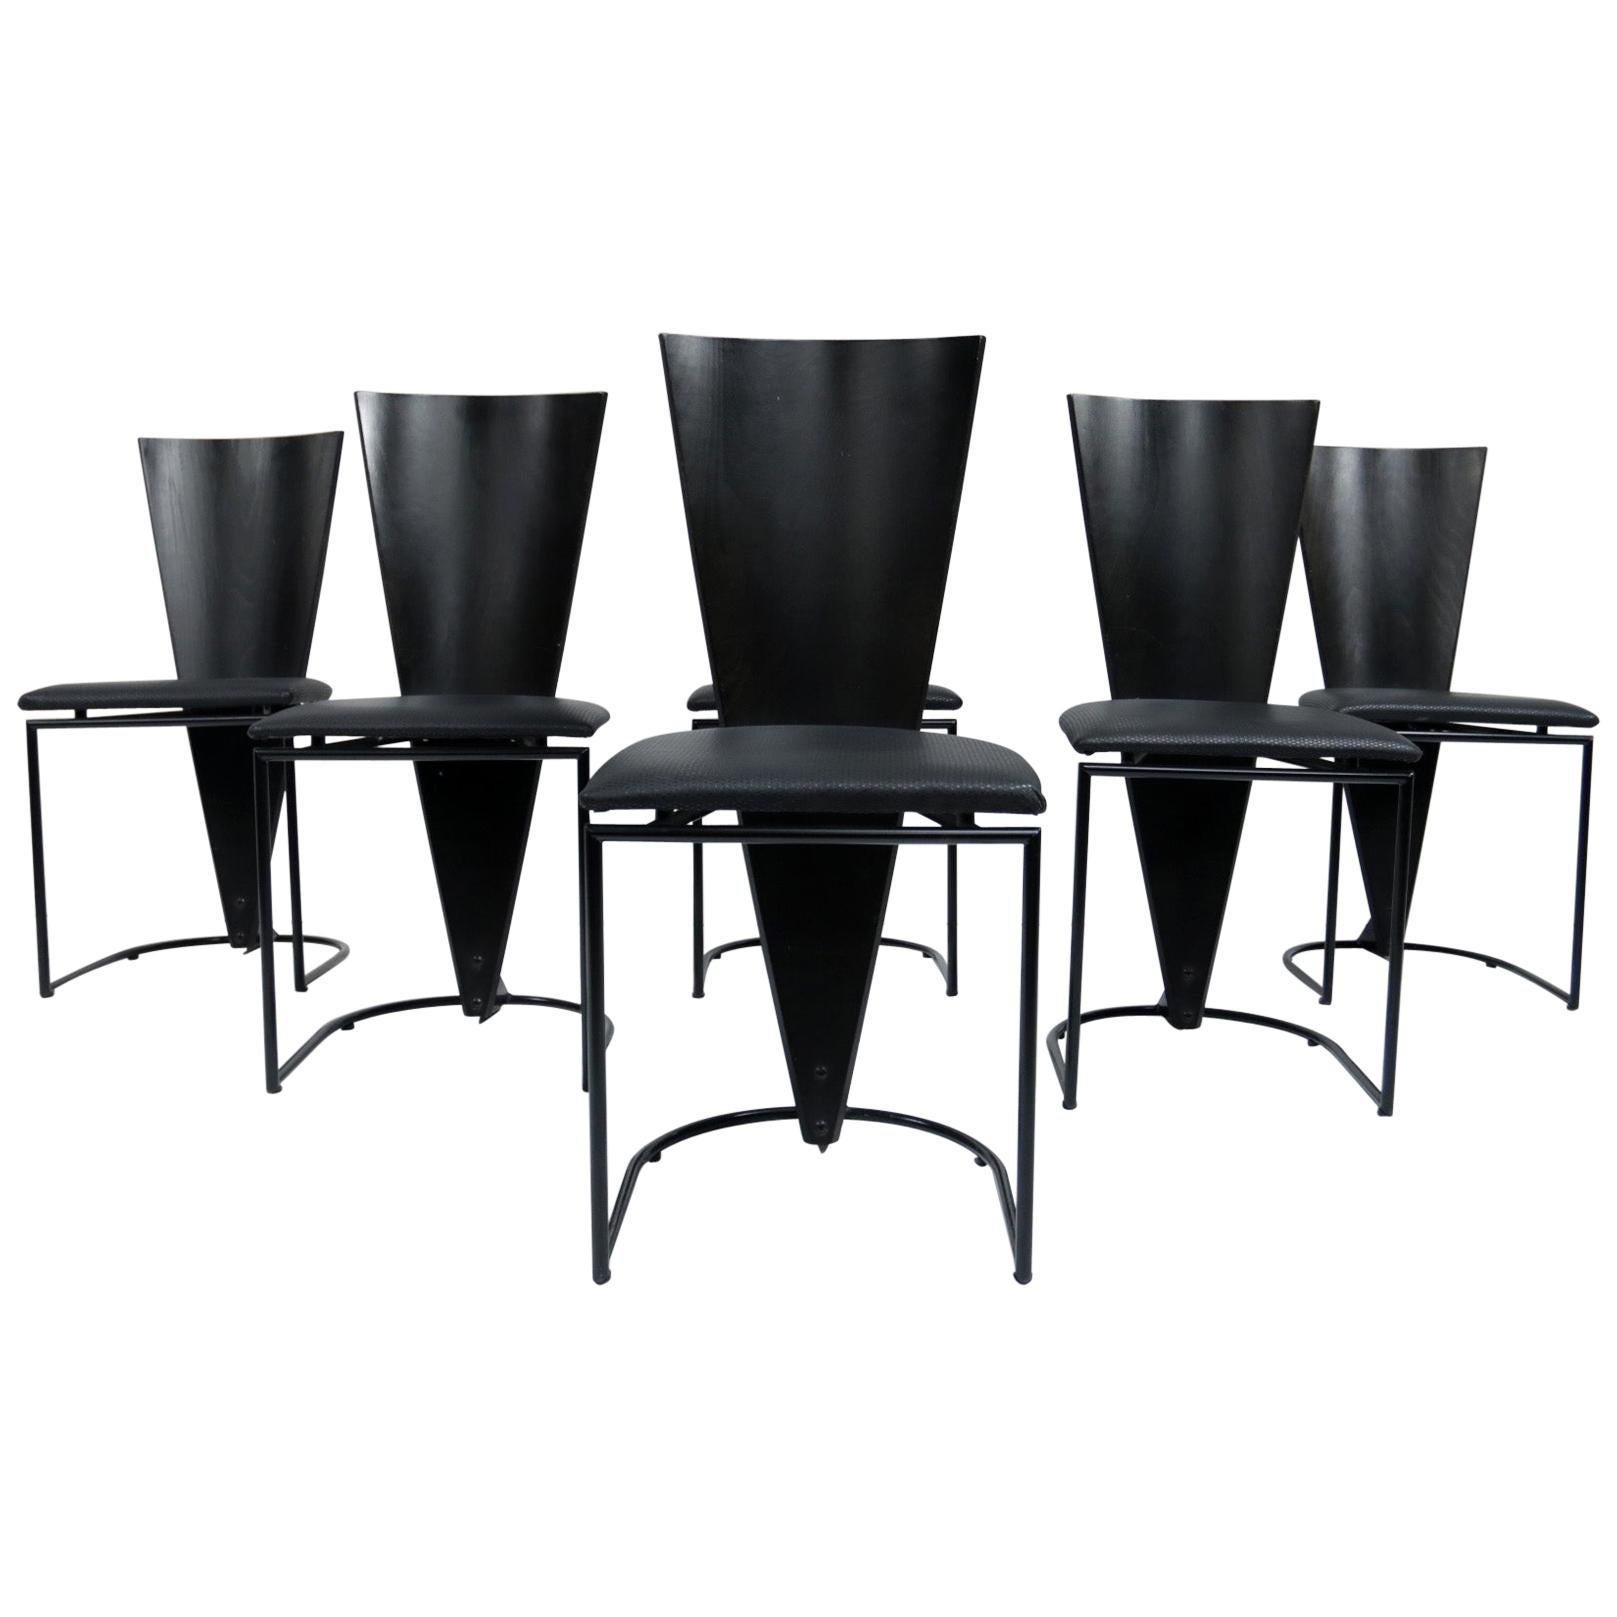 Dutch Design Harvink Zino Memphis Style Chairs Black